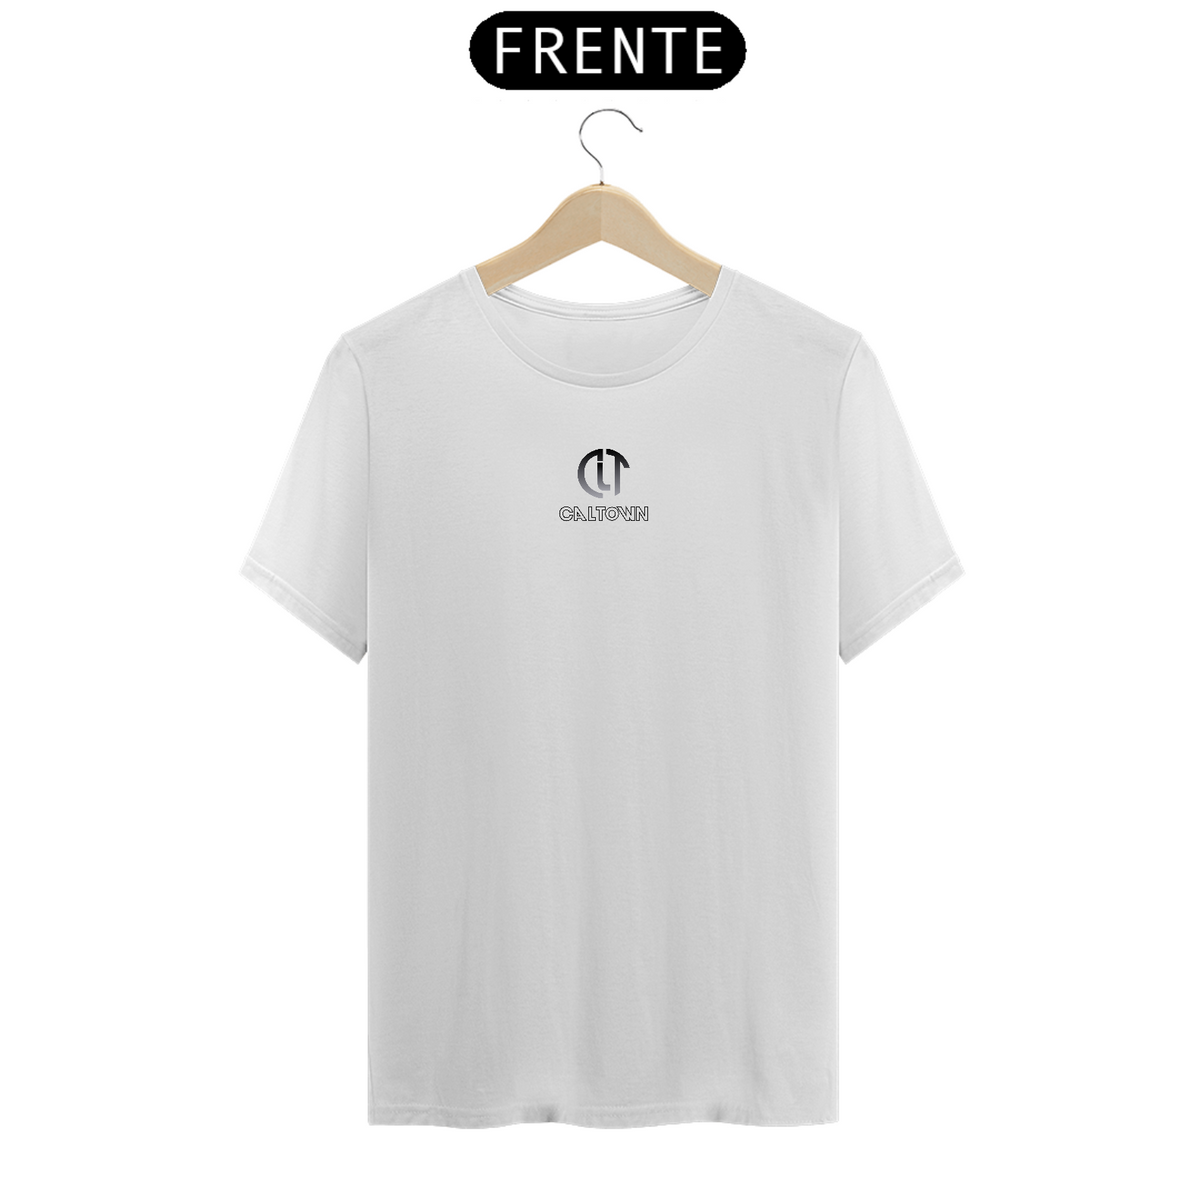 Nome do produto: Camiseta Branca Minimalista - Caltown